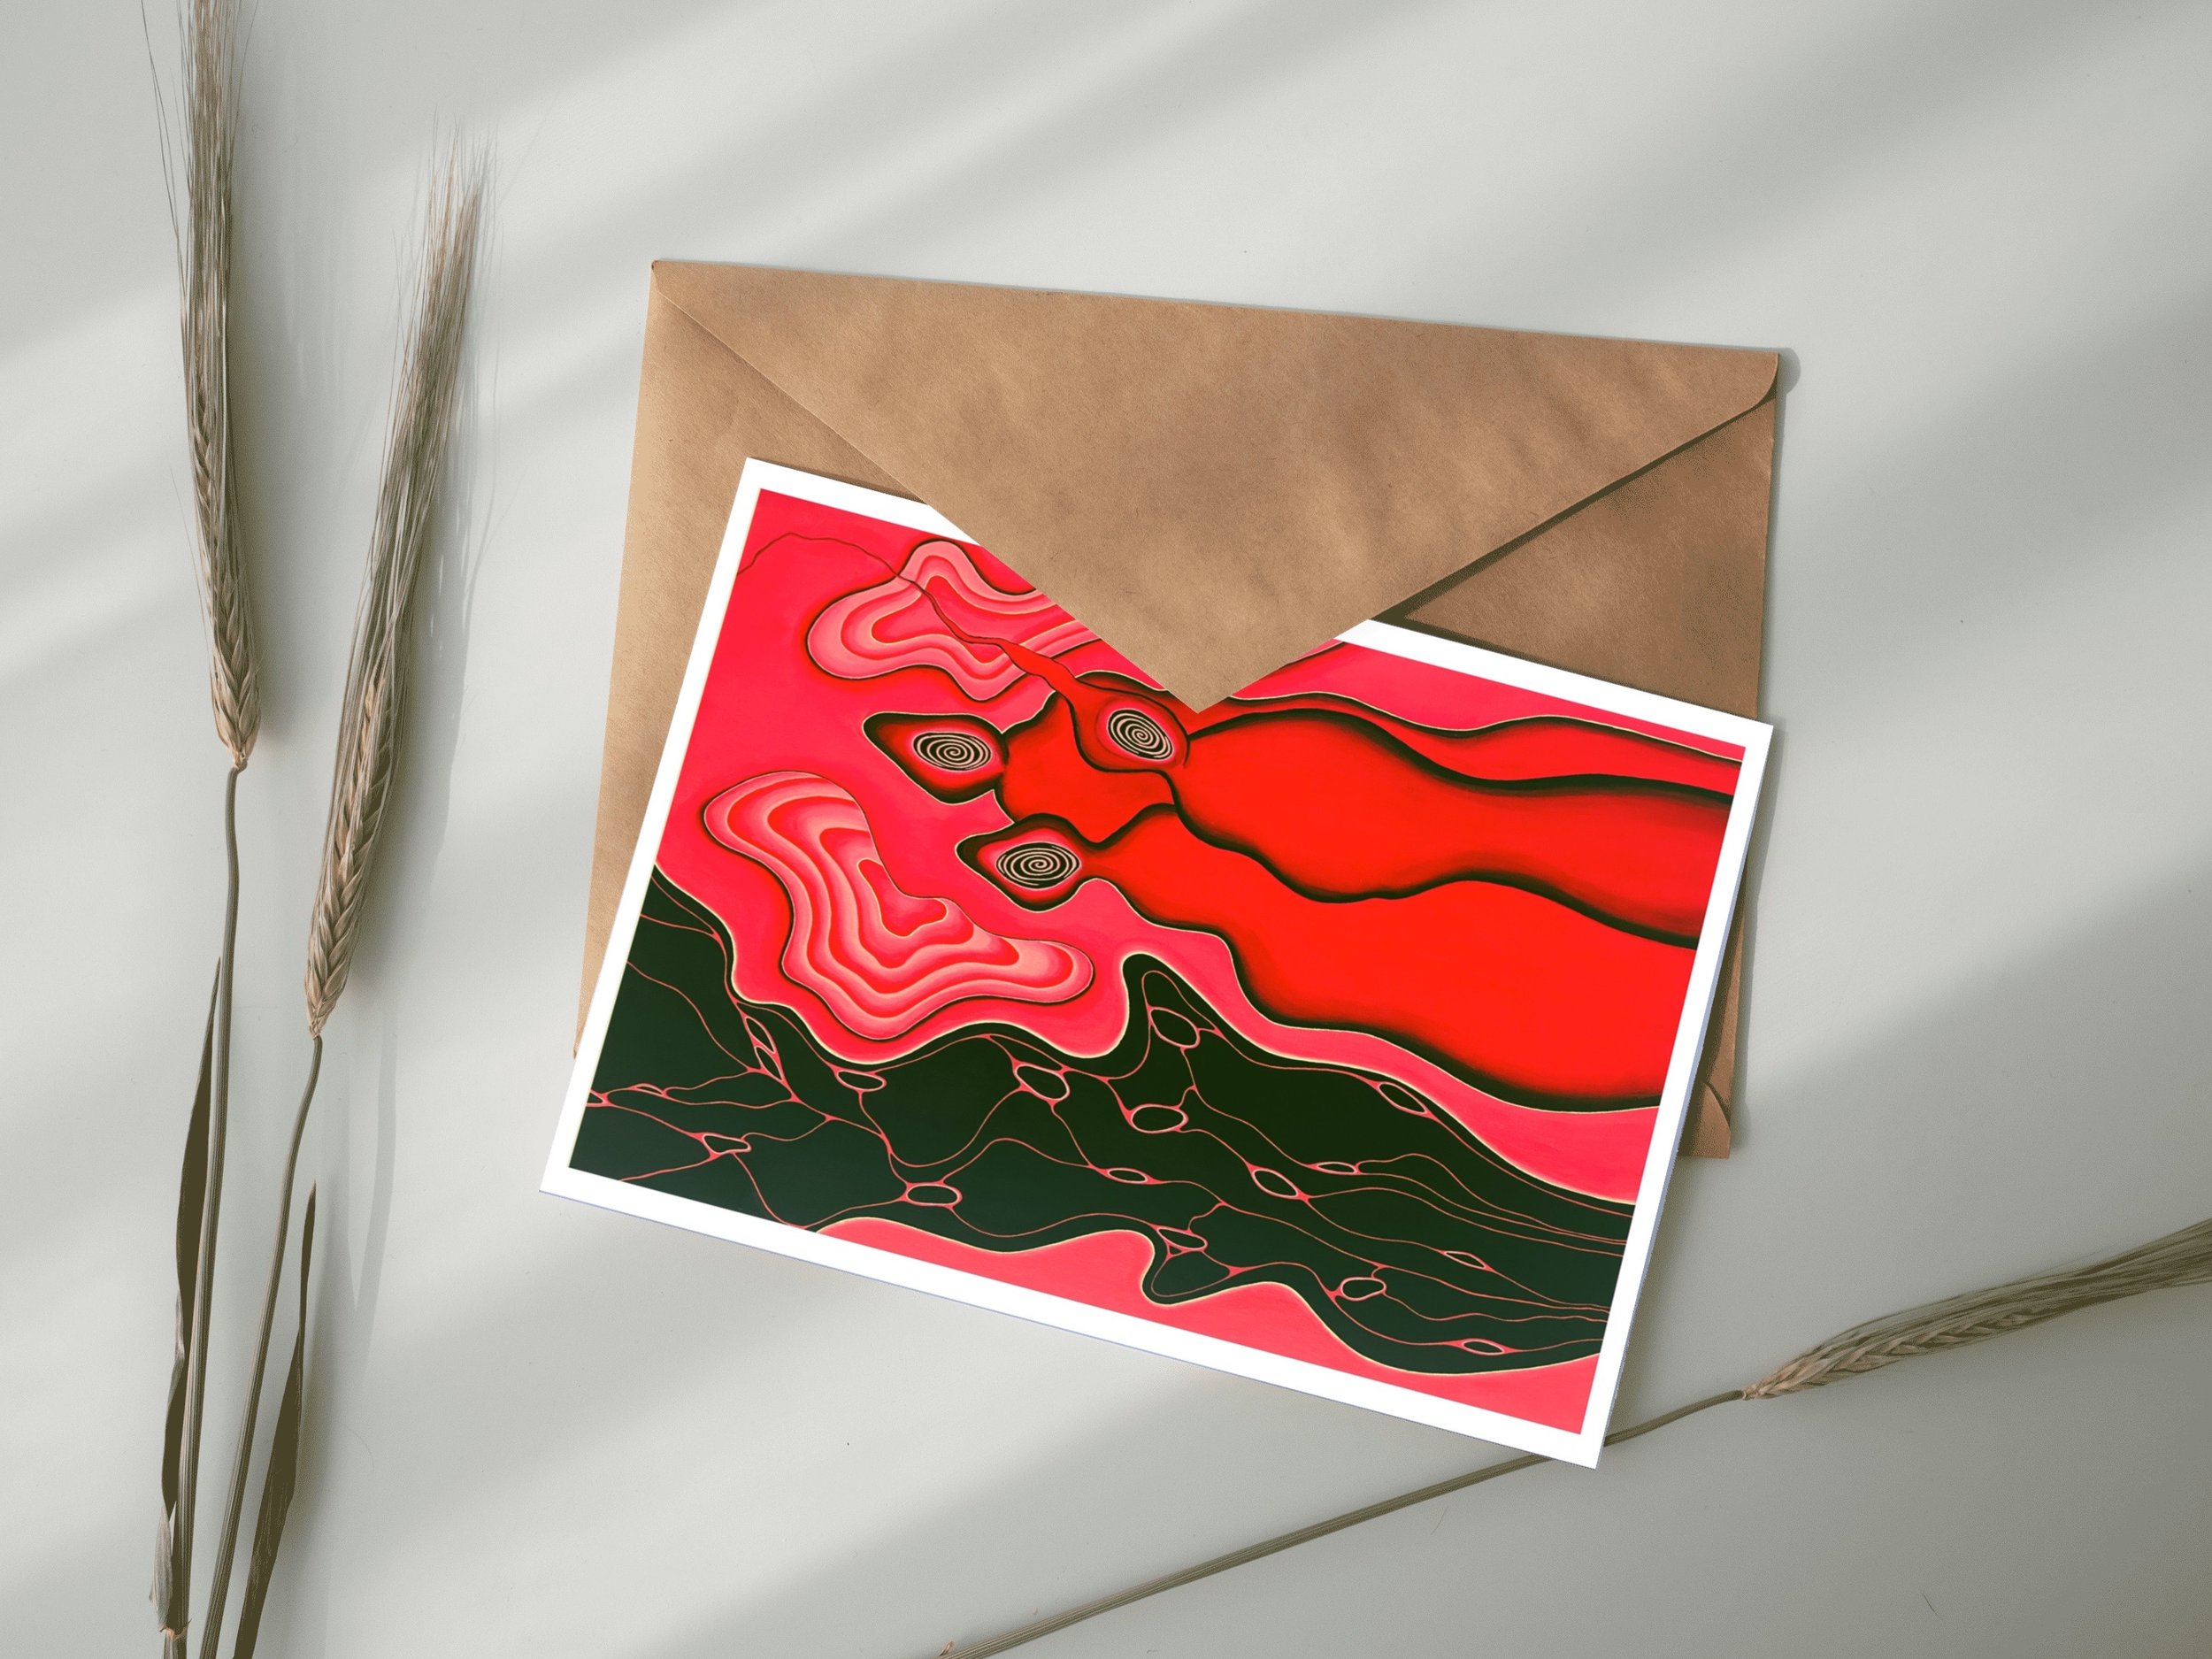 Post Card Design